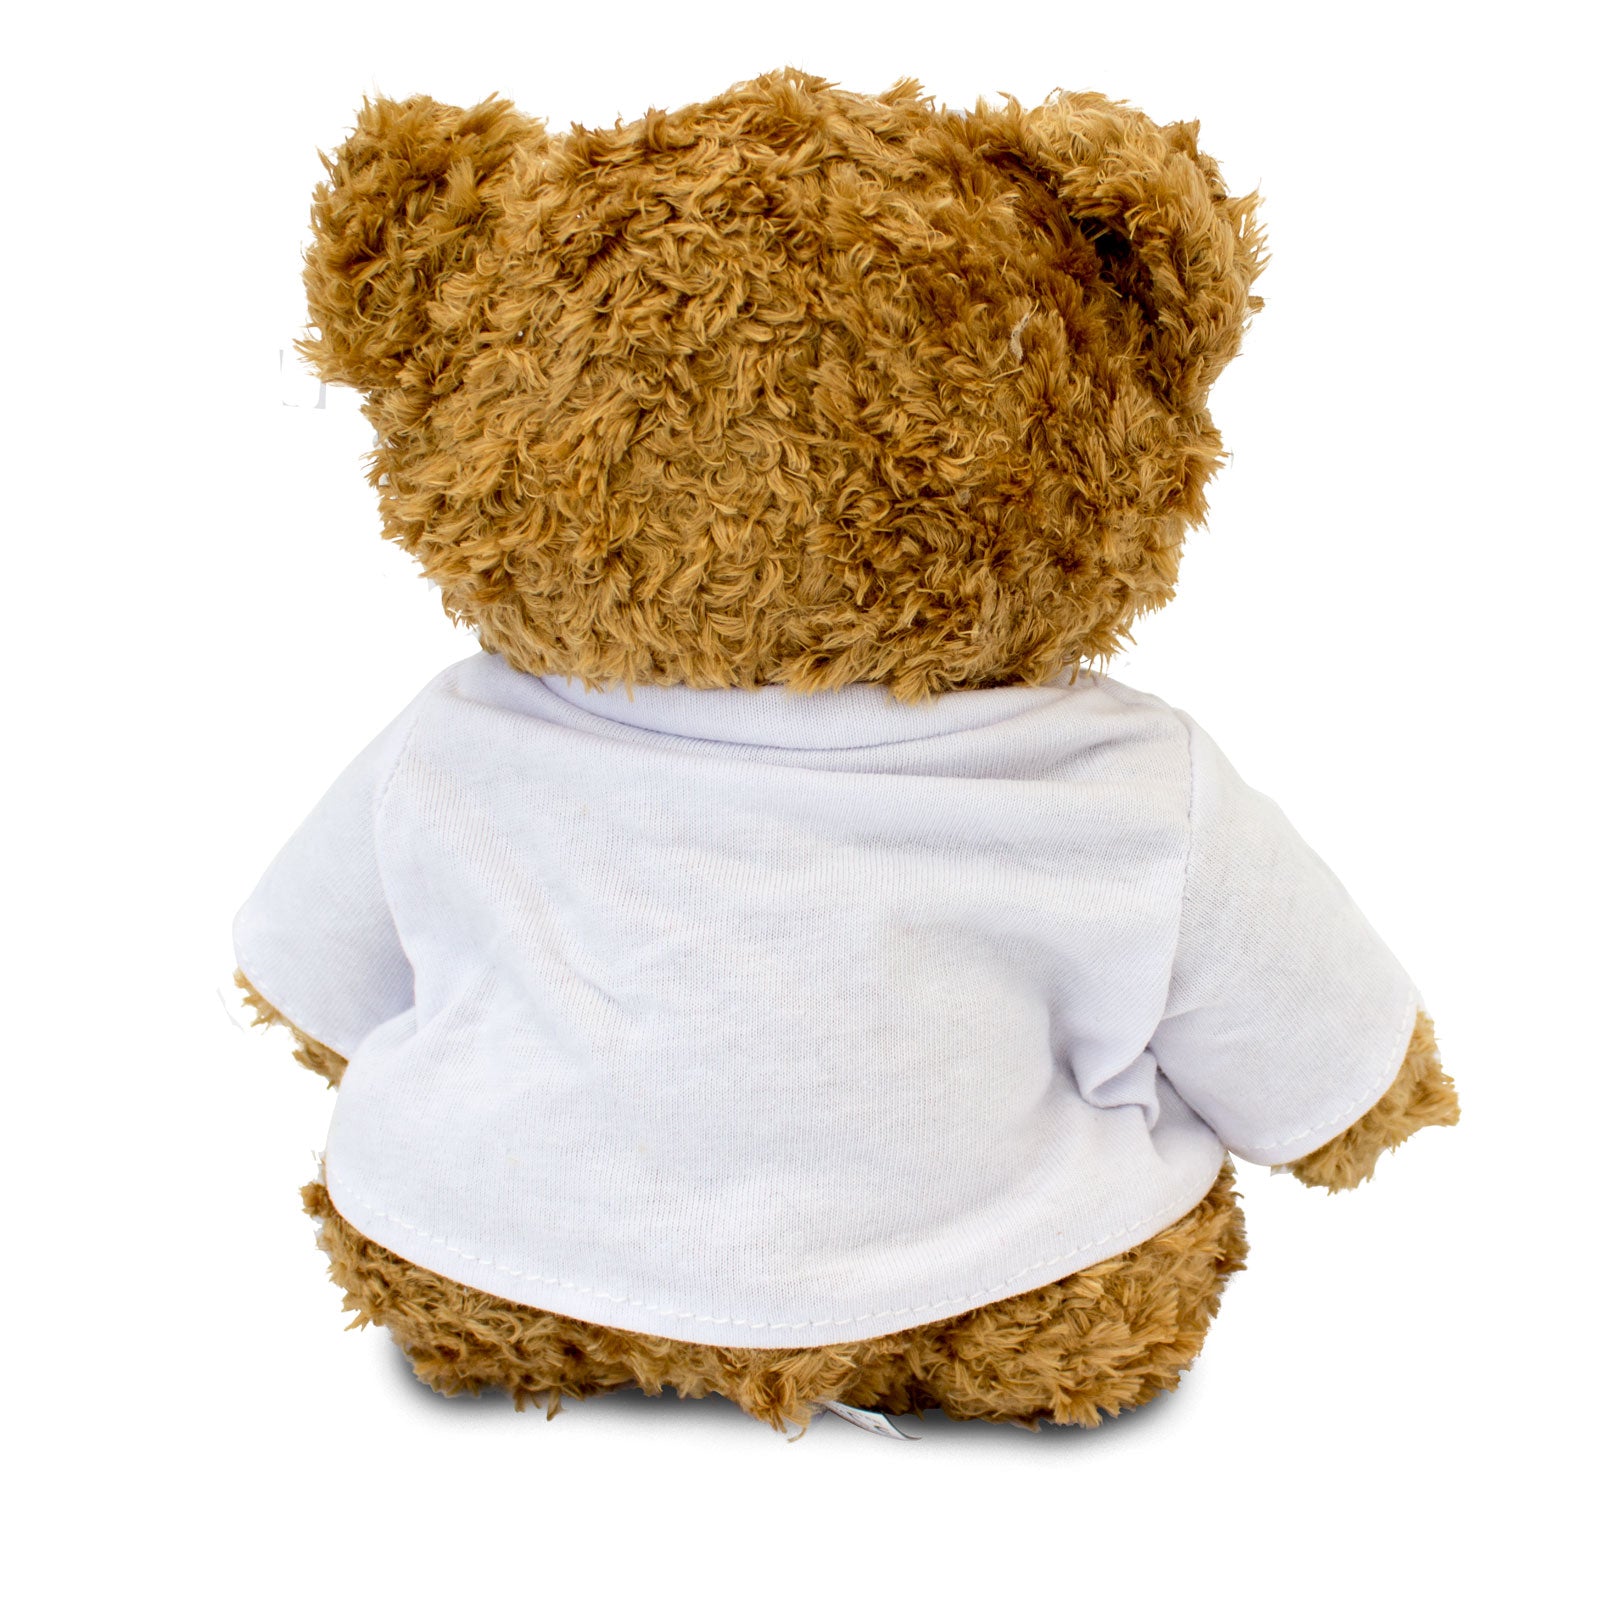 Get Well Soon Baker - Teddy Bear